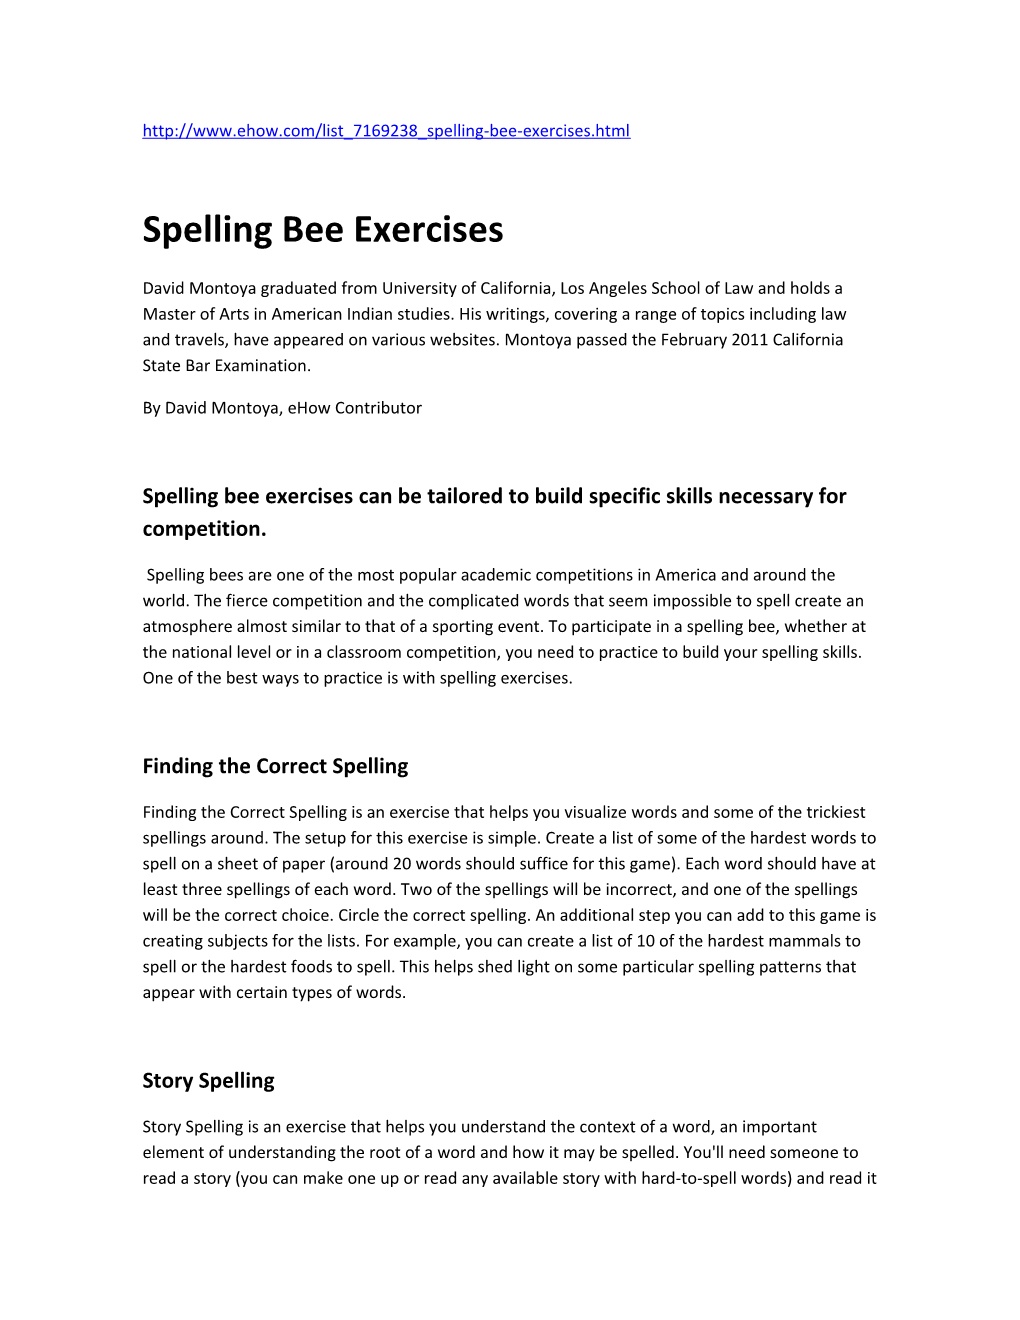 Spelling Bee Exercises